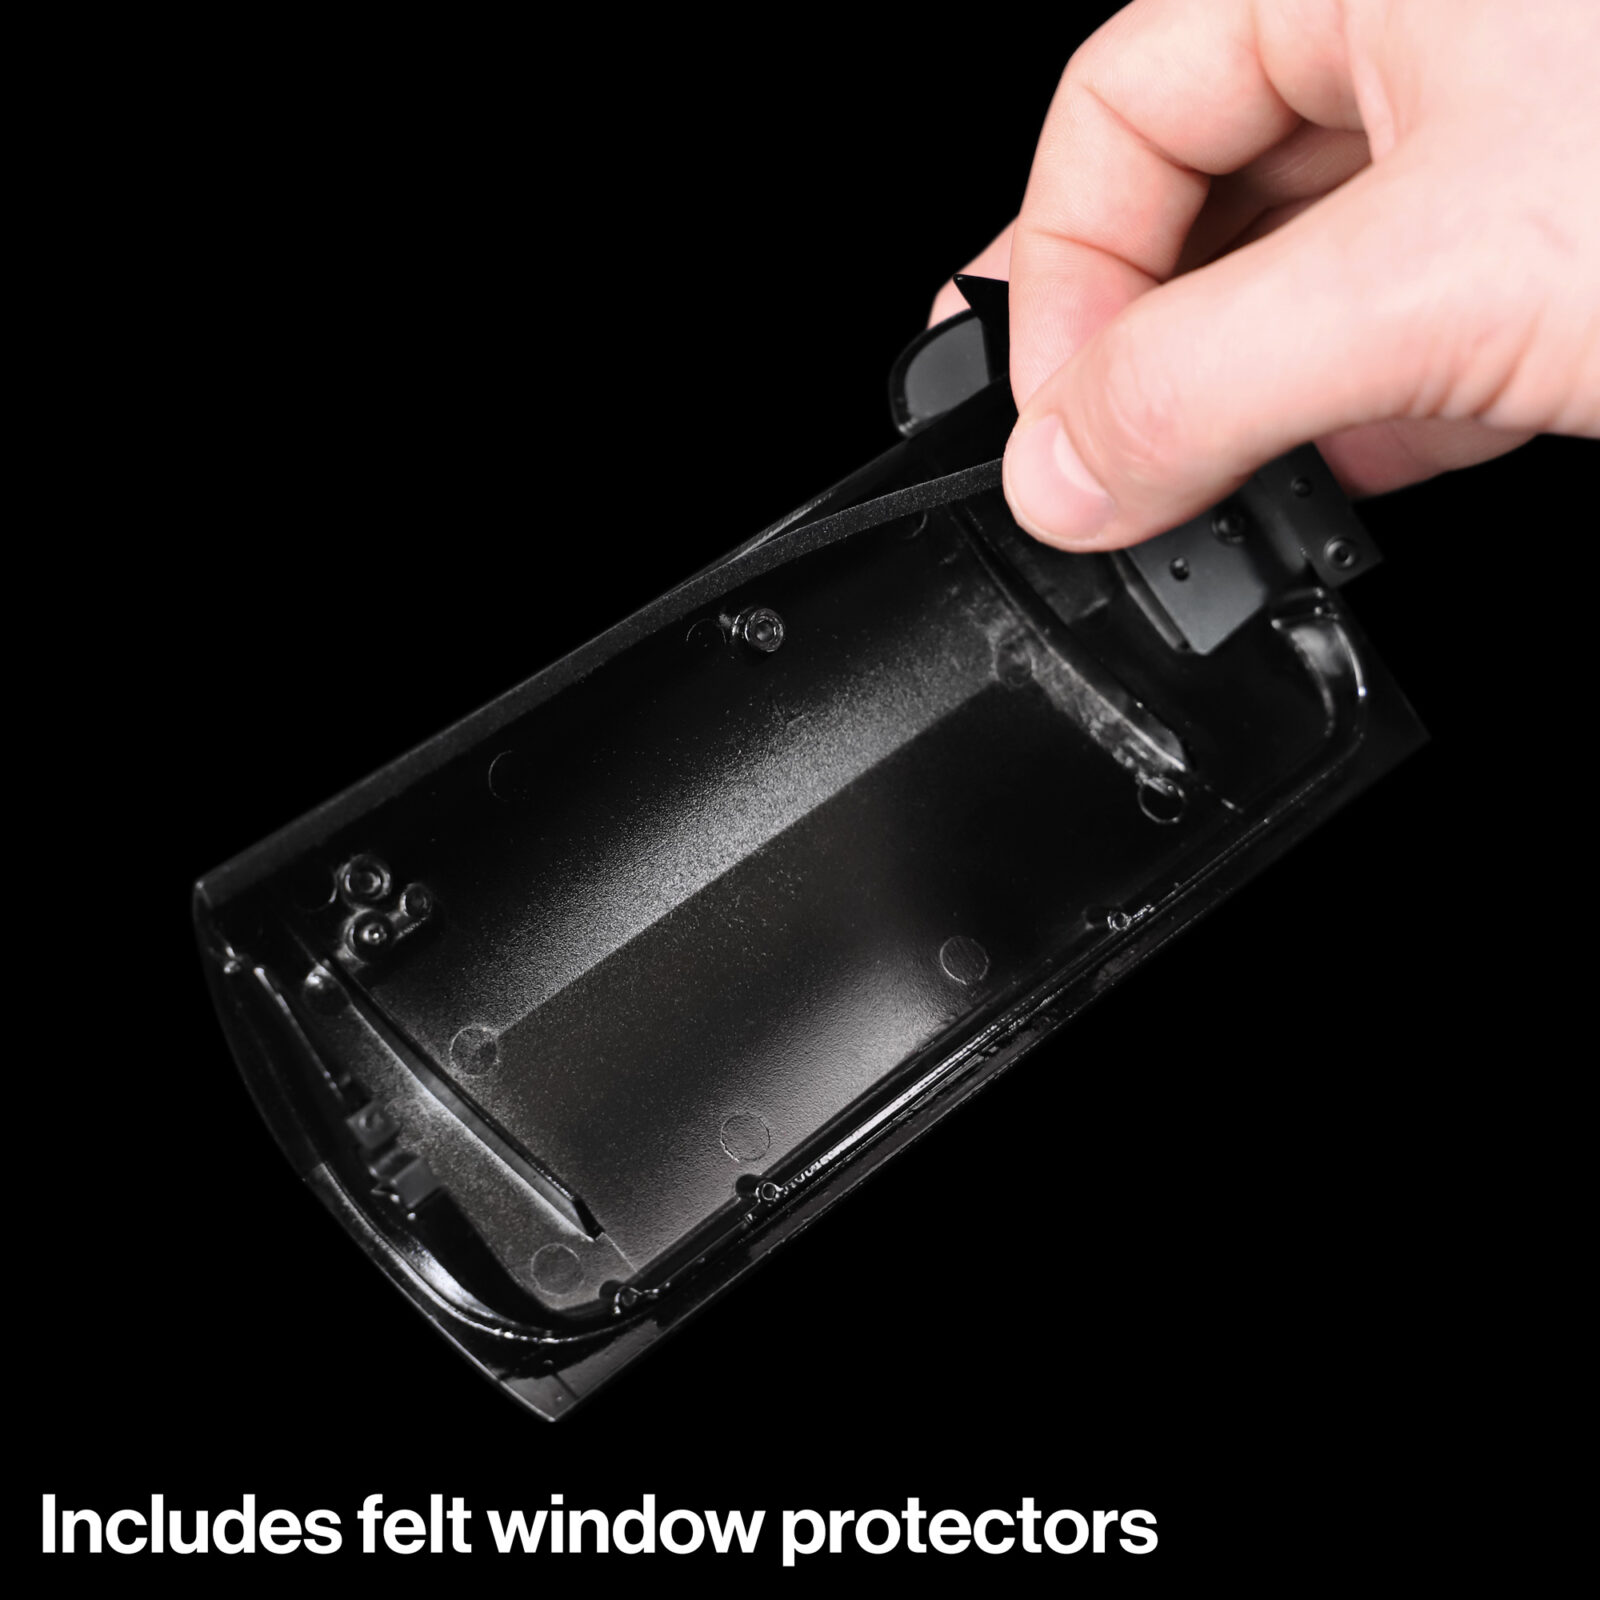 KITT felt window protectors included with mod